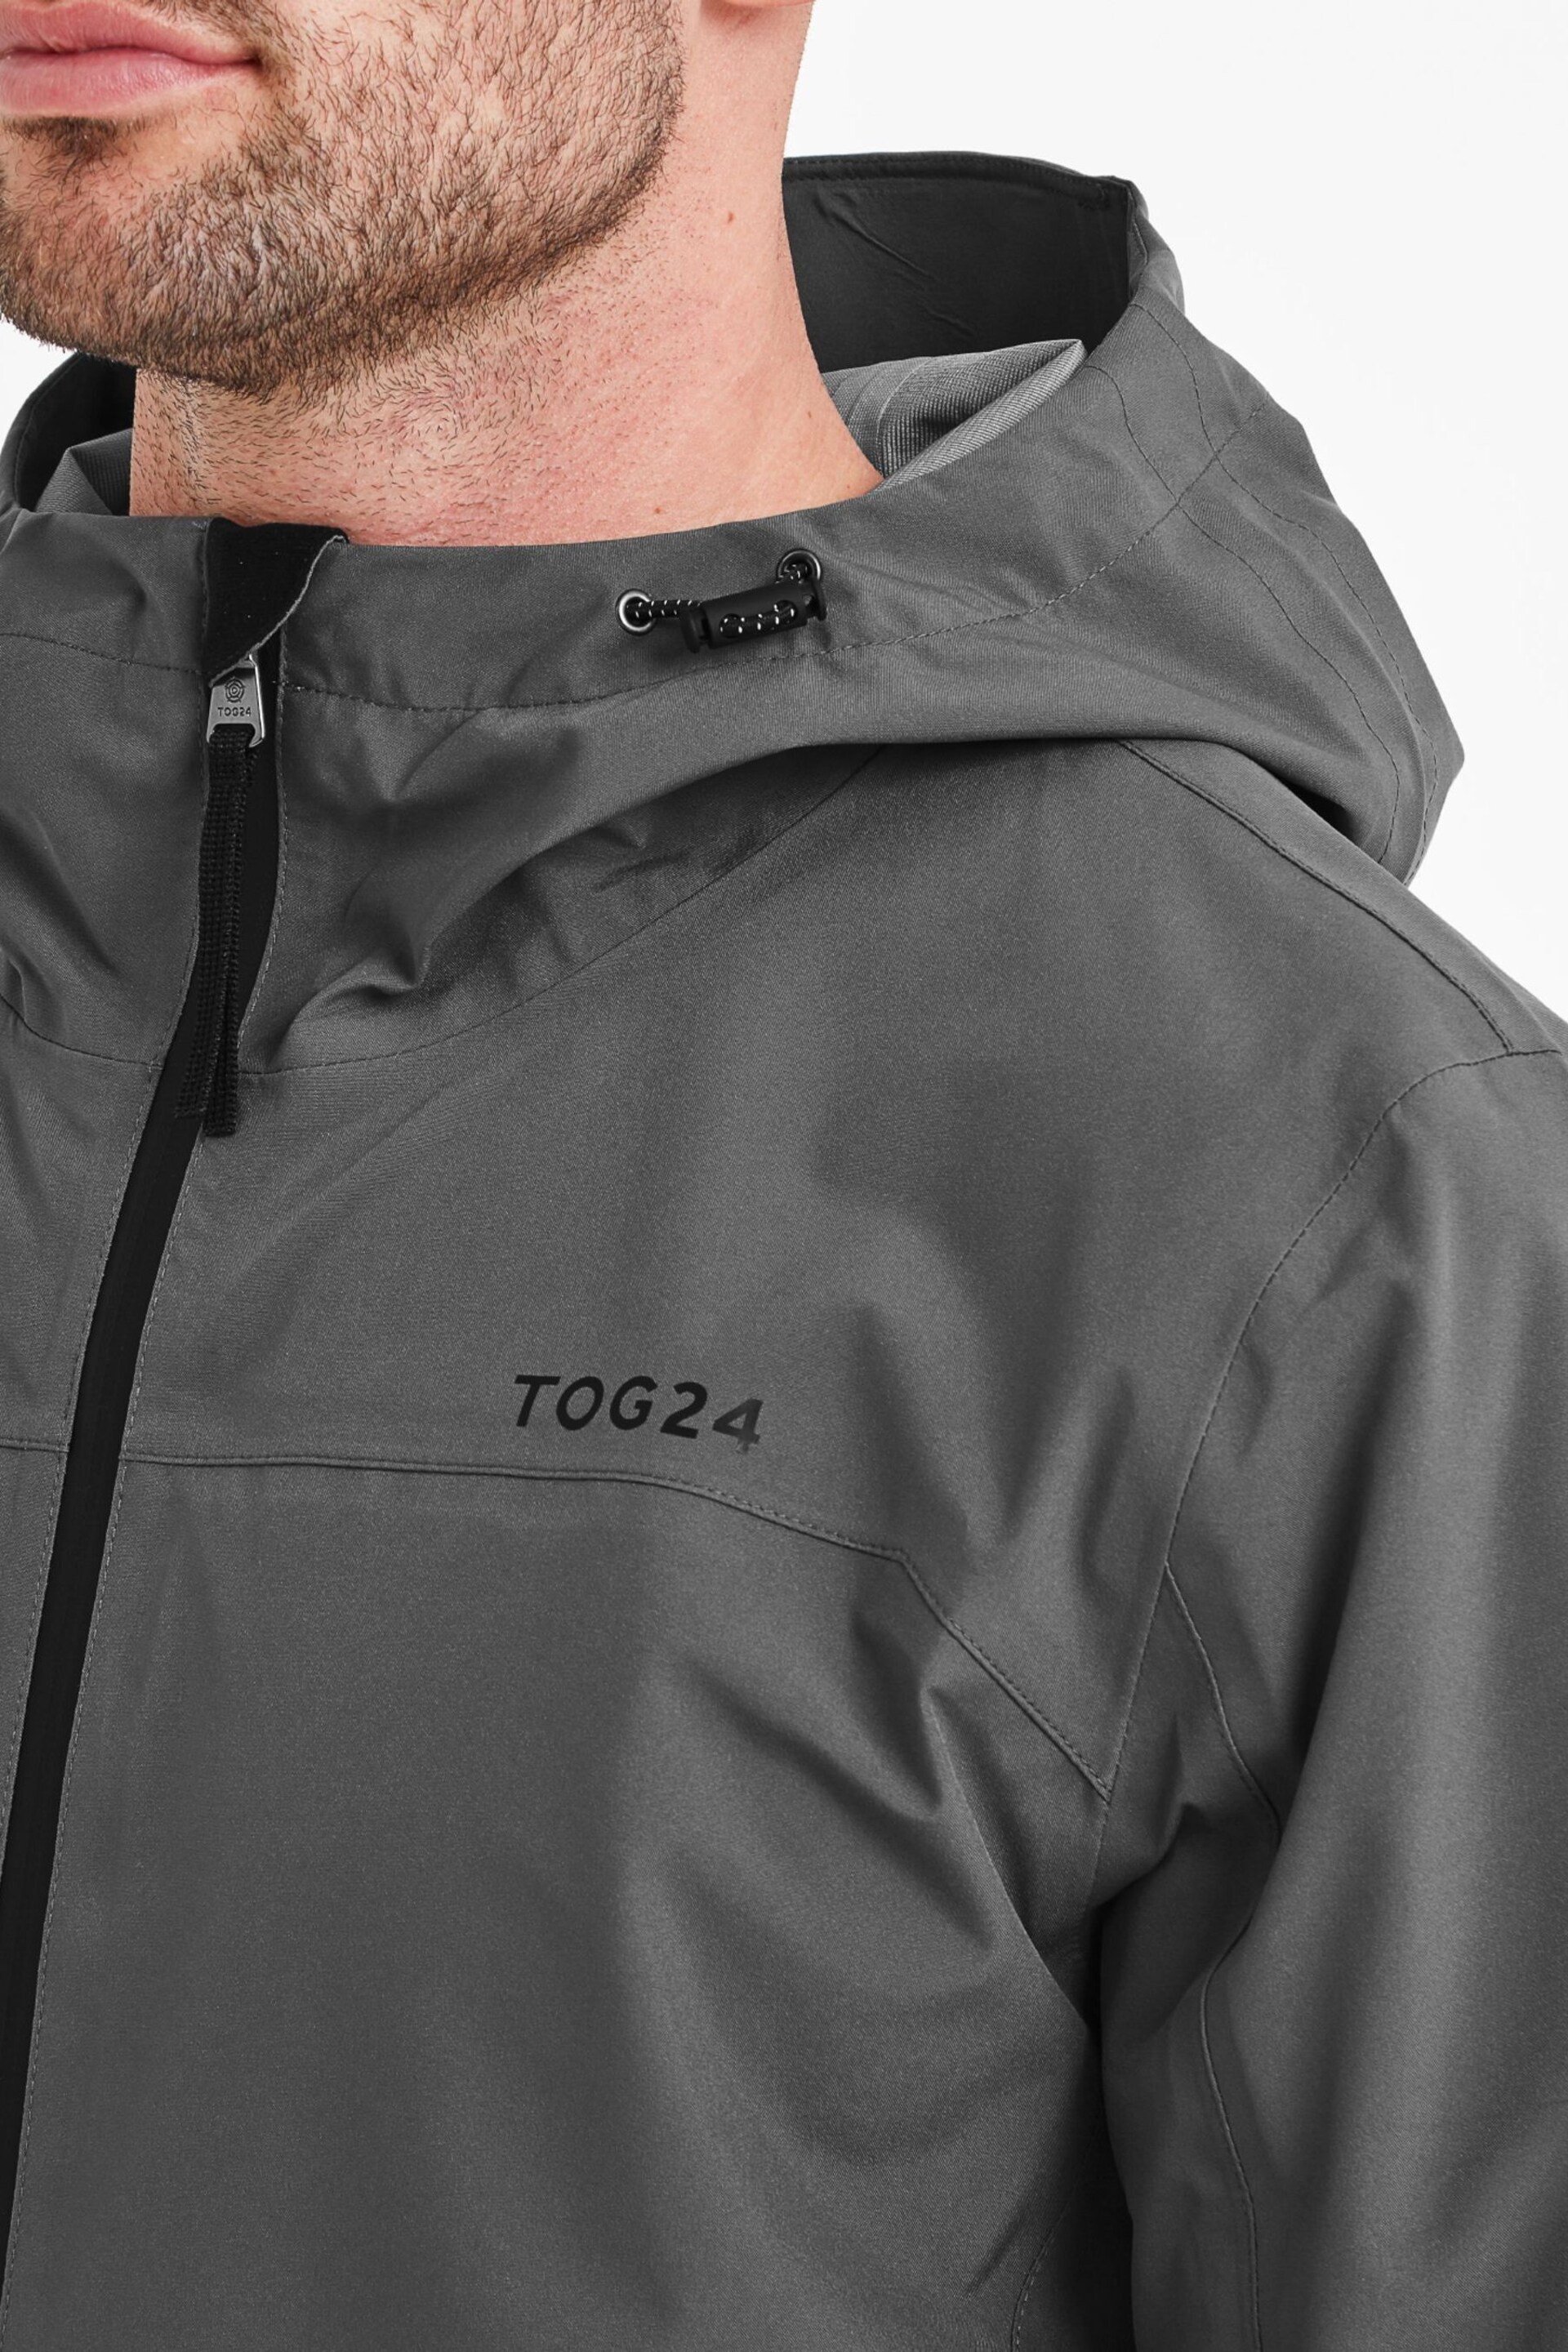 Tog 24 Grey Bowston Waterproof Jacket - Image 5 of 5